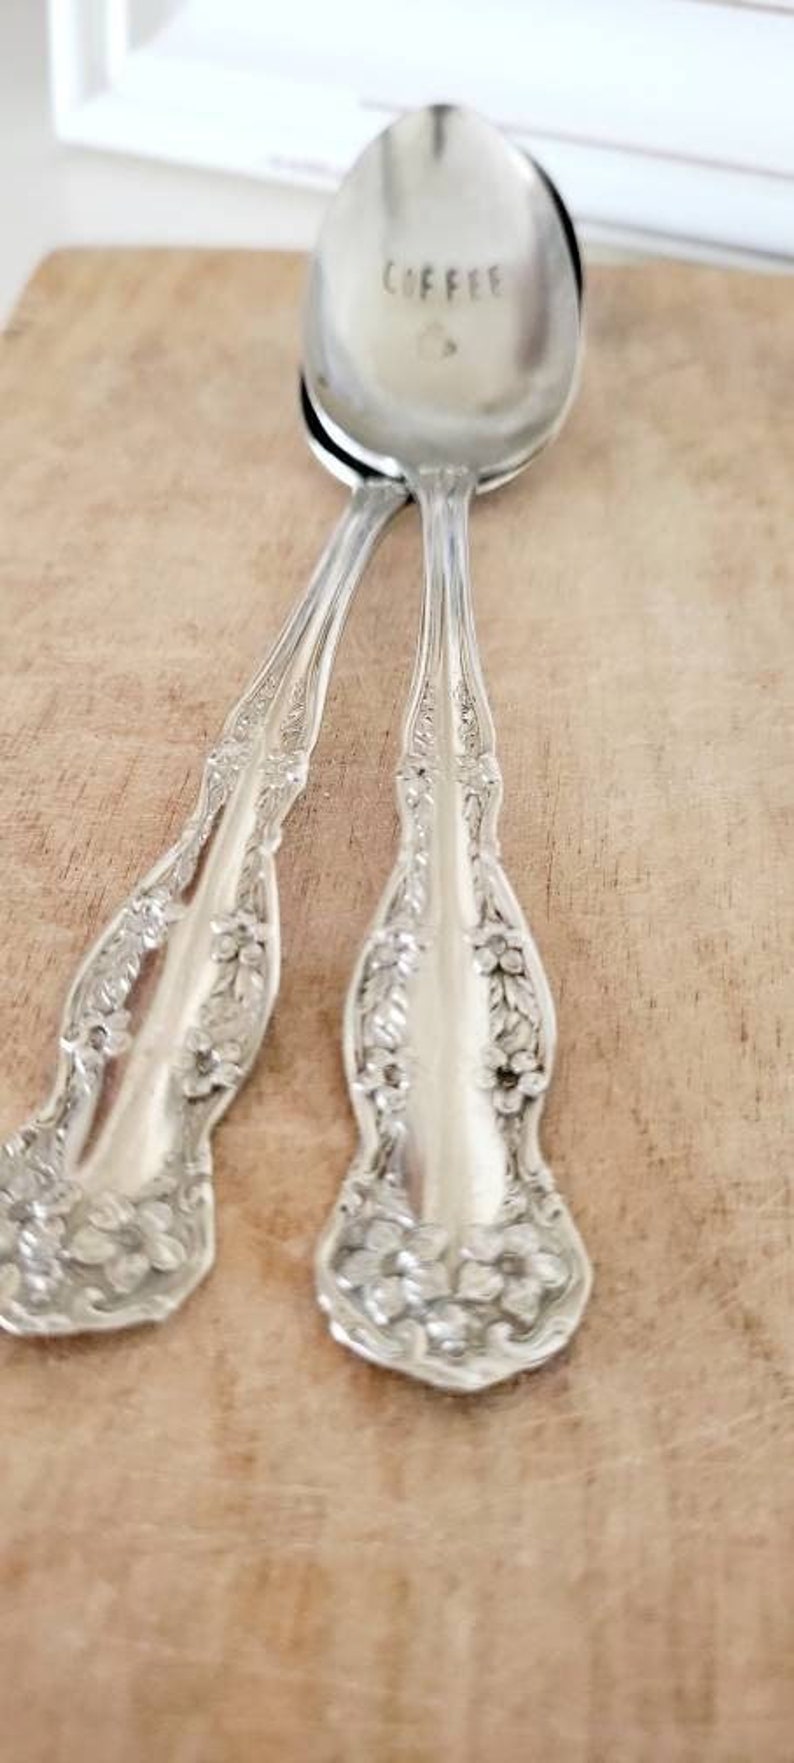 VIntage Silver Plated Teaspoon,Coffee spoon,engraved spoon,vintage coffee spoon,vintage spoon,vintage gift,custom gift image 4